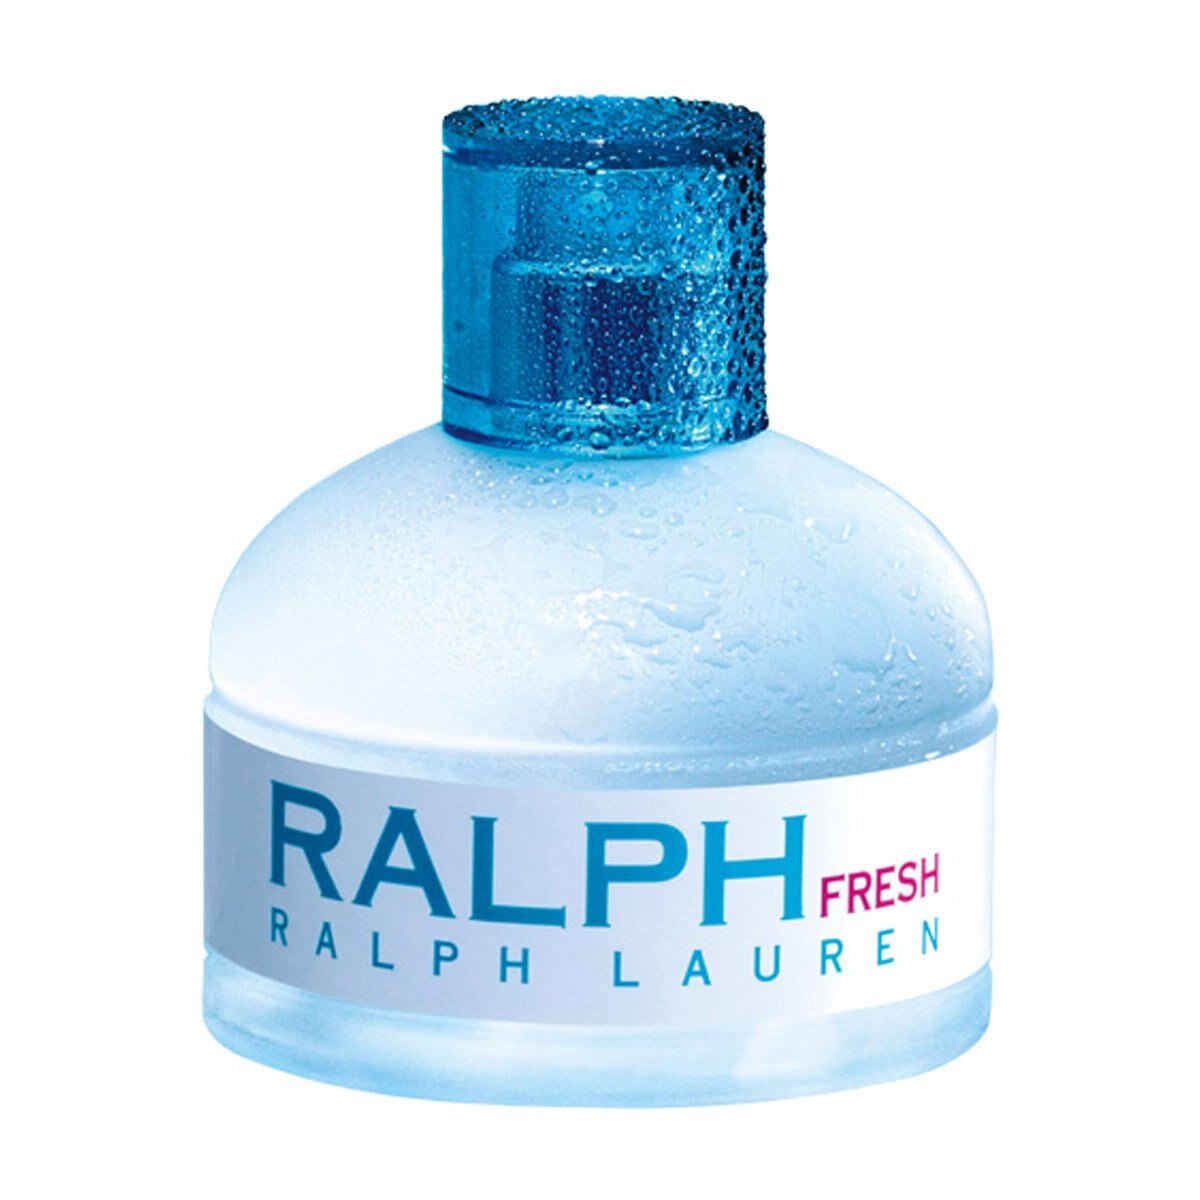 Perfume Ralph Lauren Fresh (100Ml) Edt